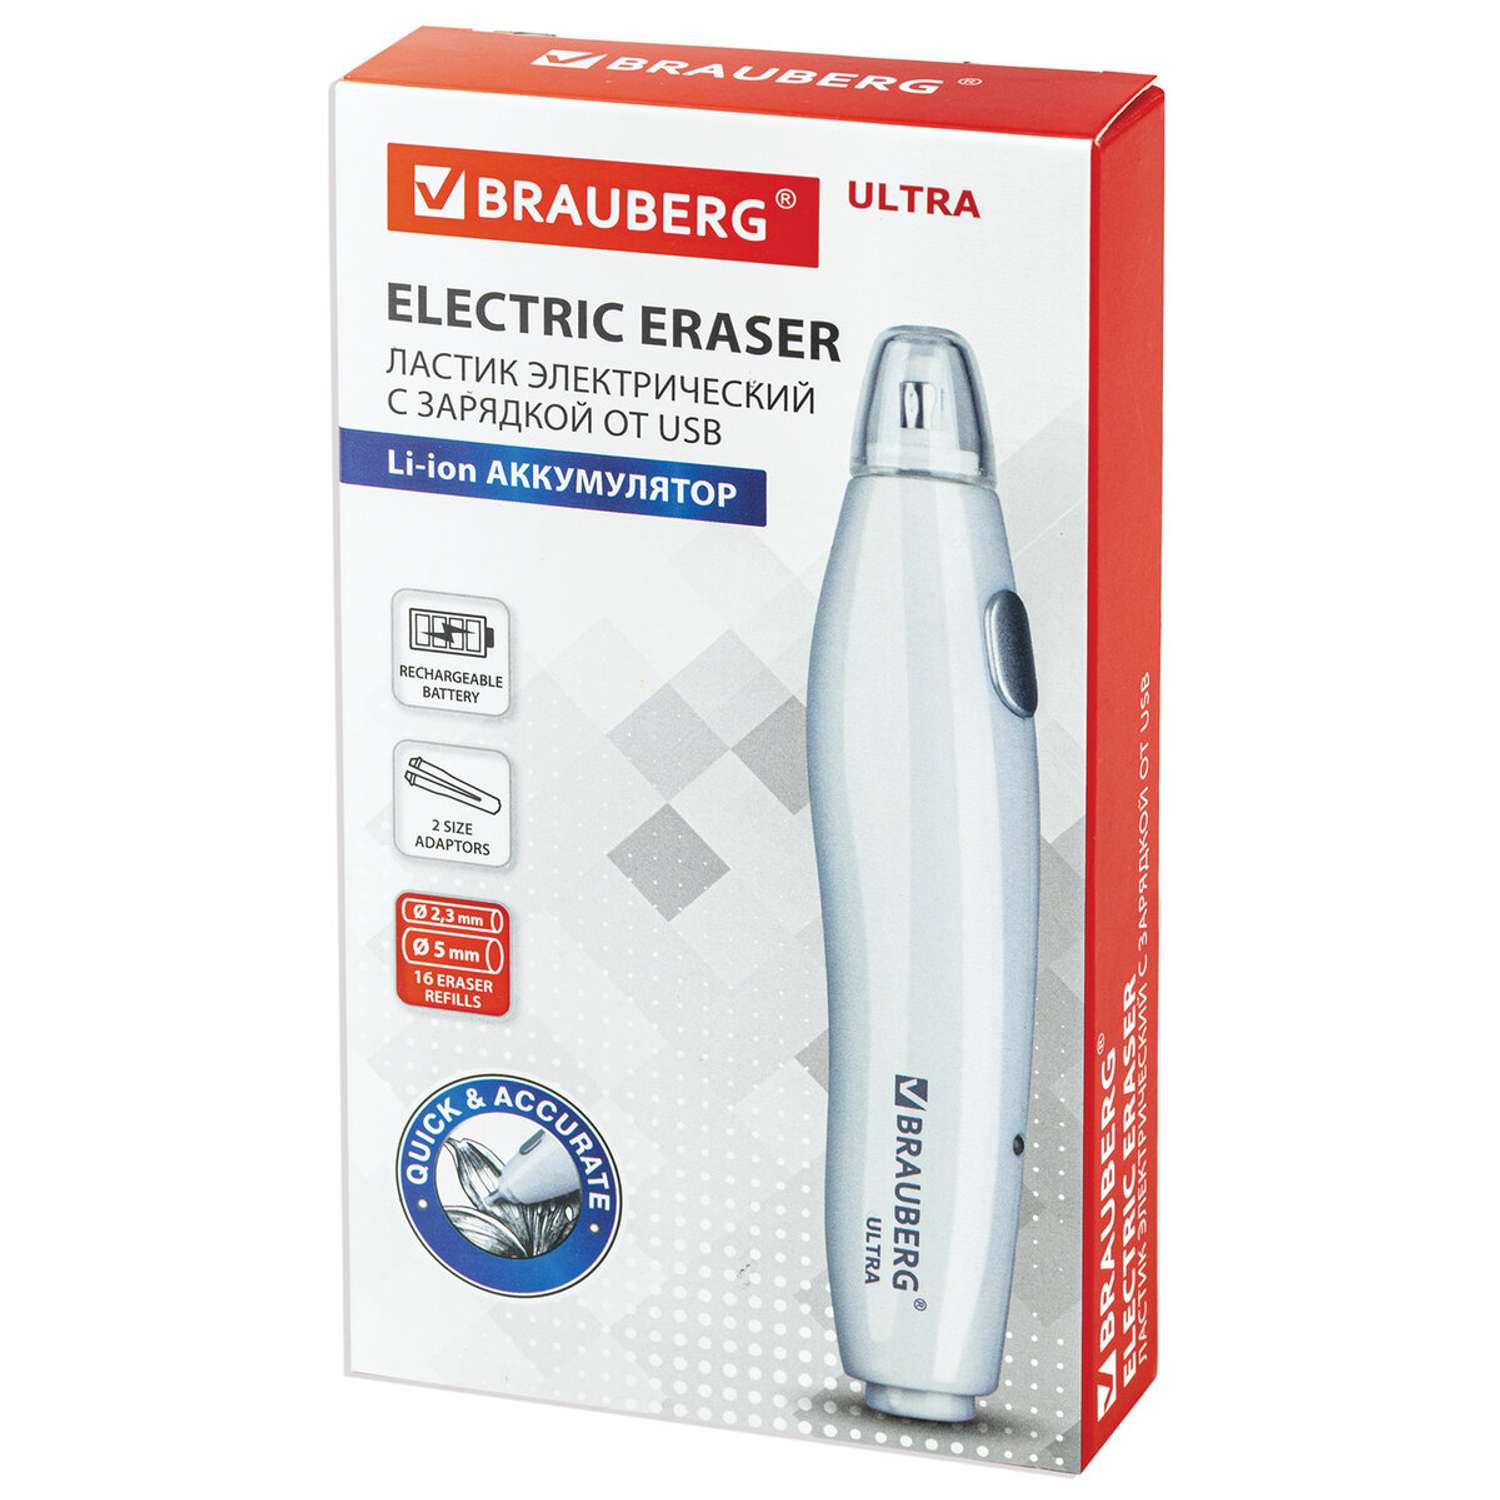 Ластик электрический Brauberg Ultra аккумулятор зарядка USB - фото 1